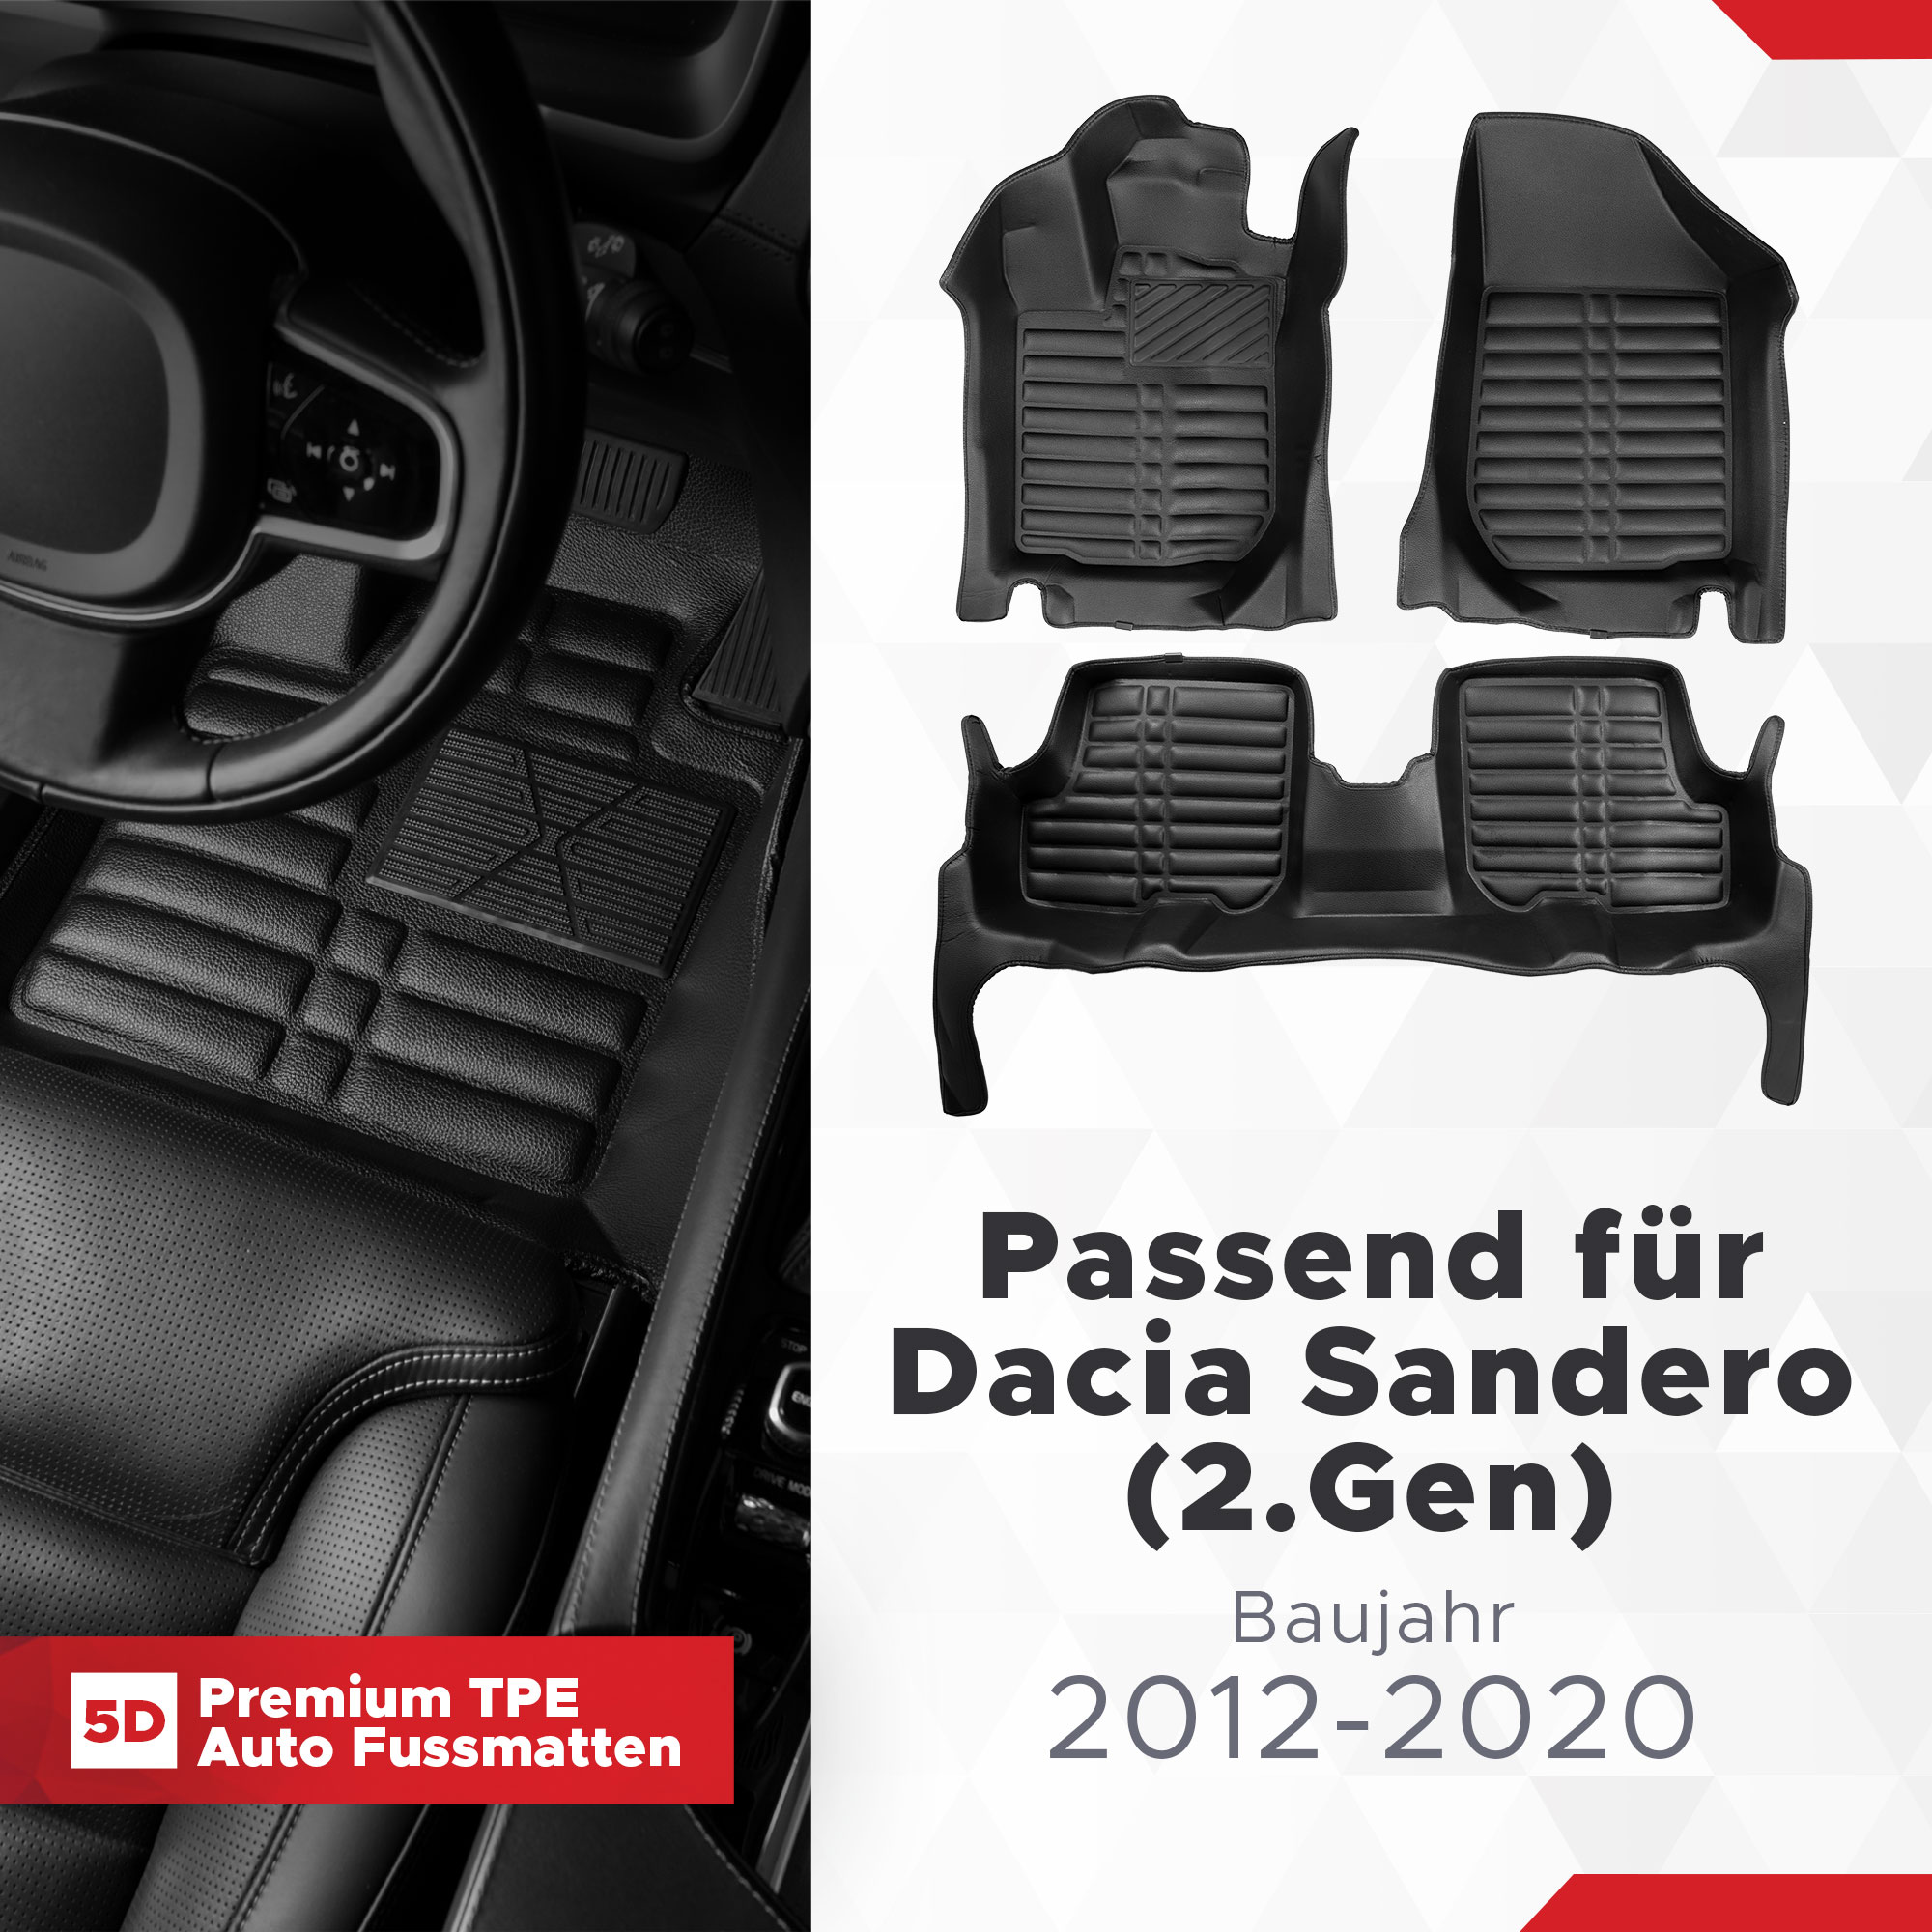 5D Dacia Sandero (2.Gen) Fussmatten Bj 2012-2020 TPE